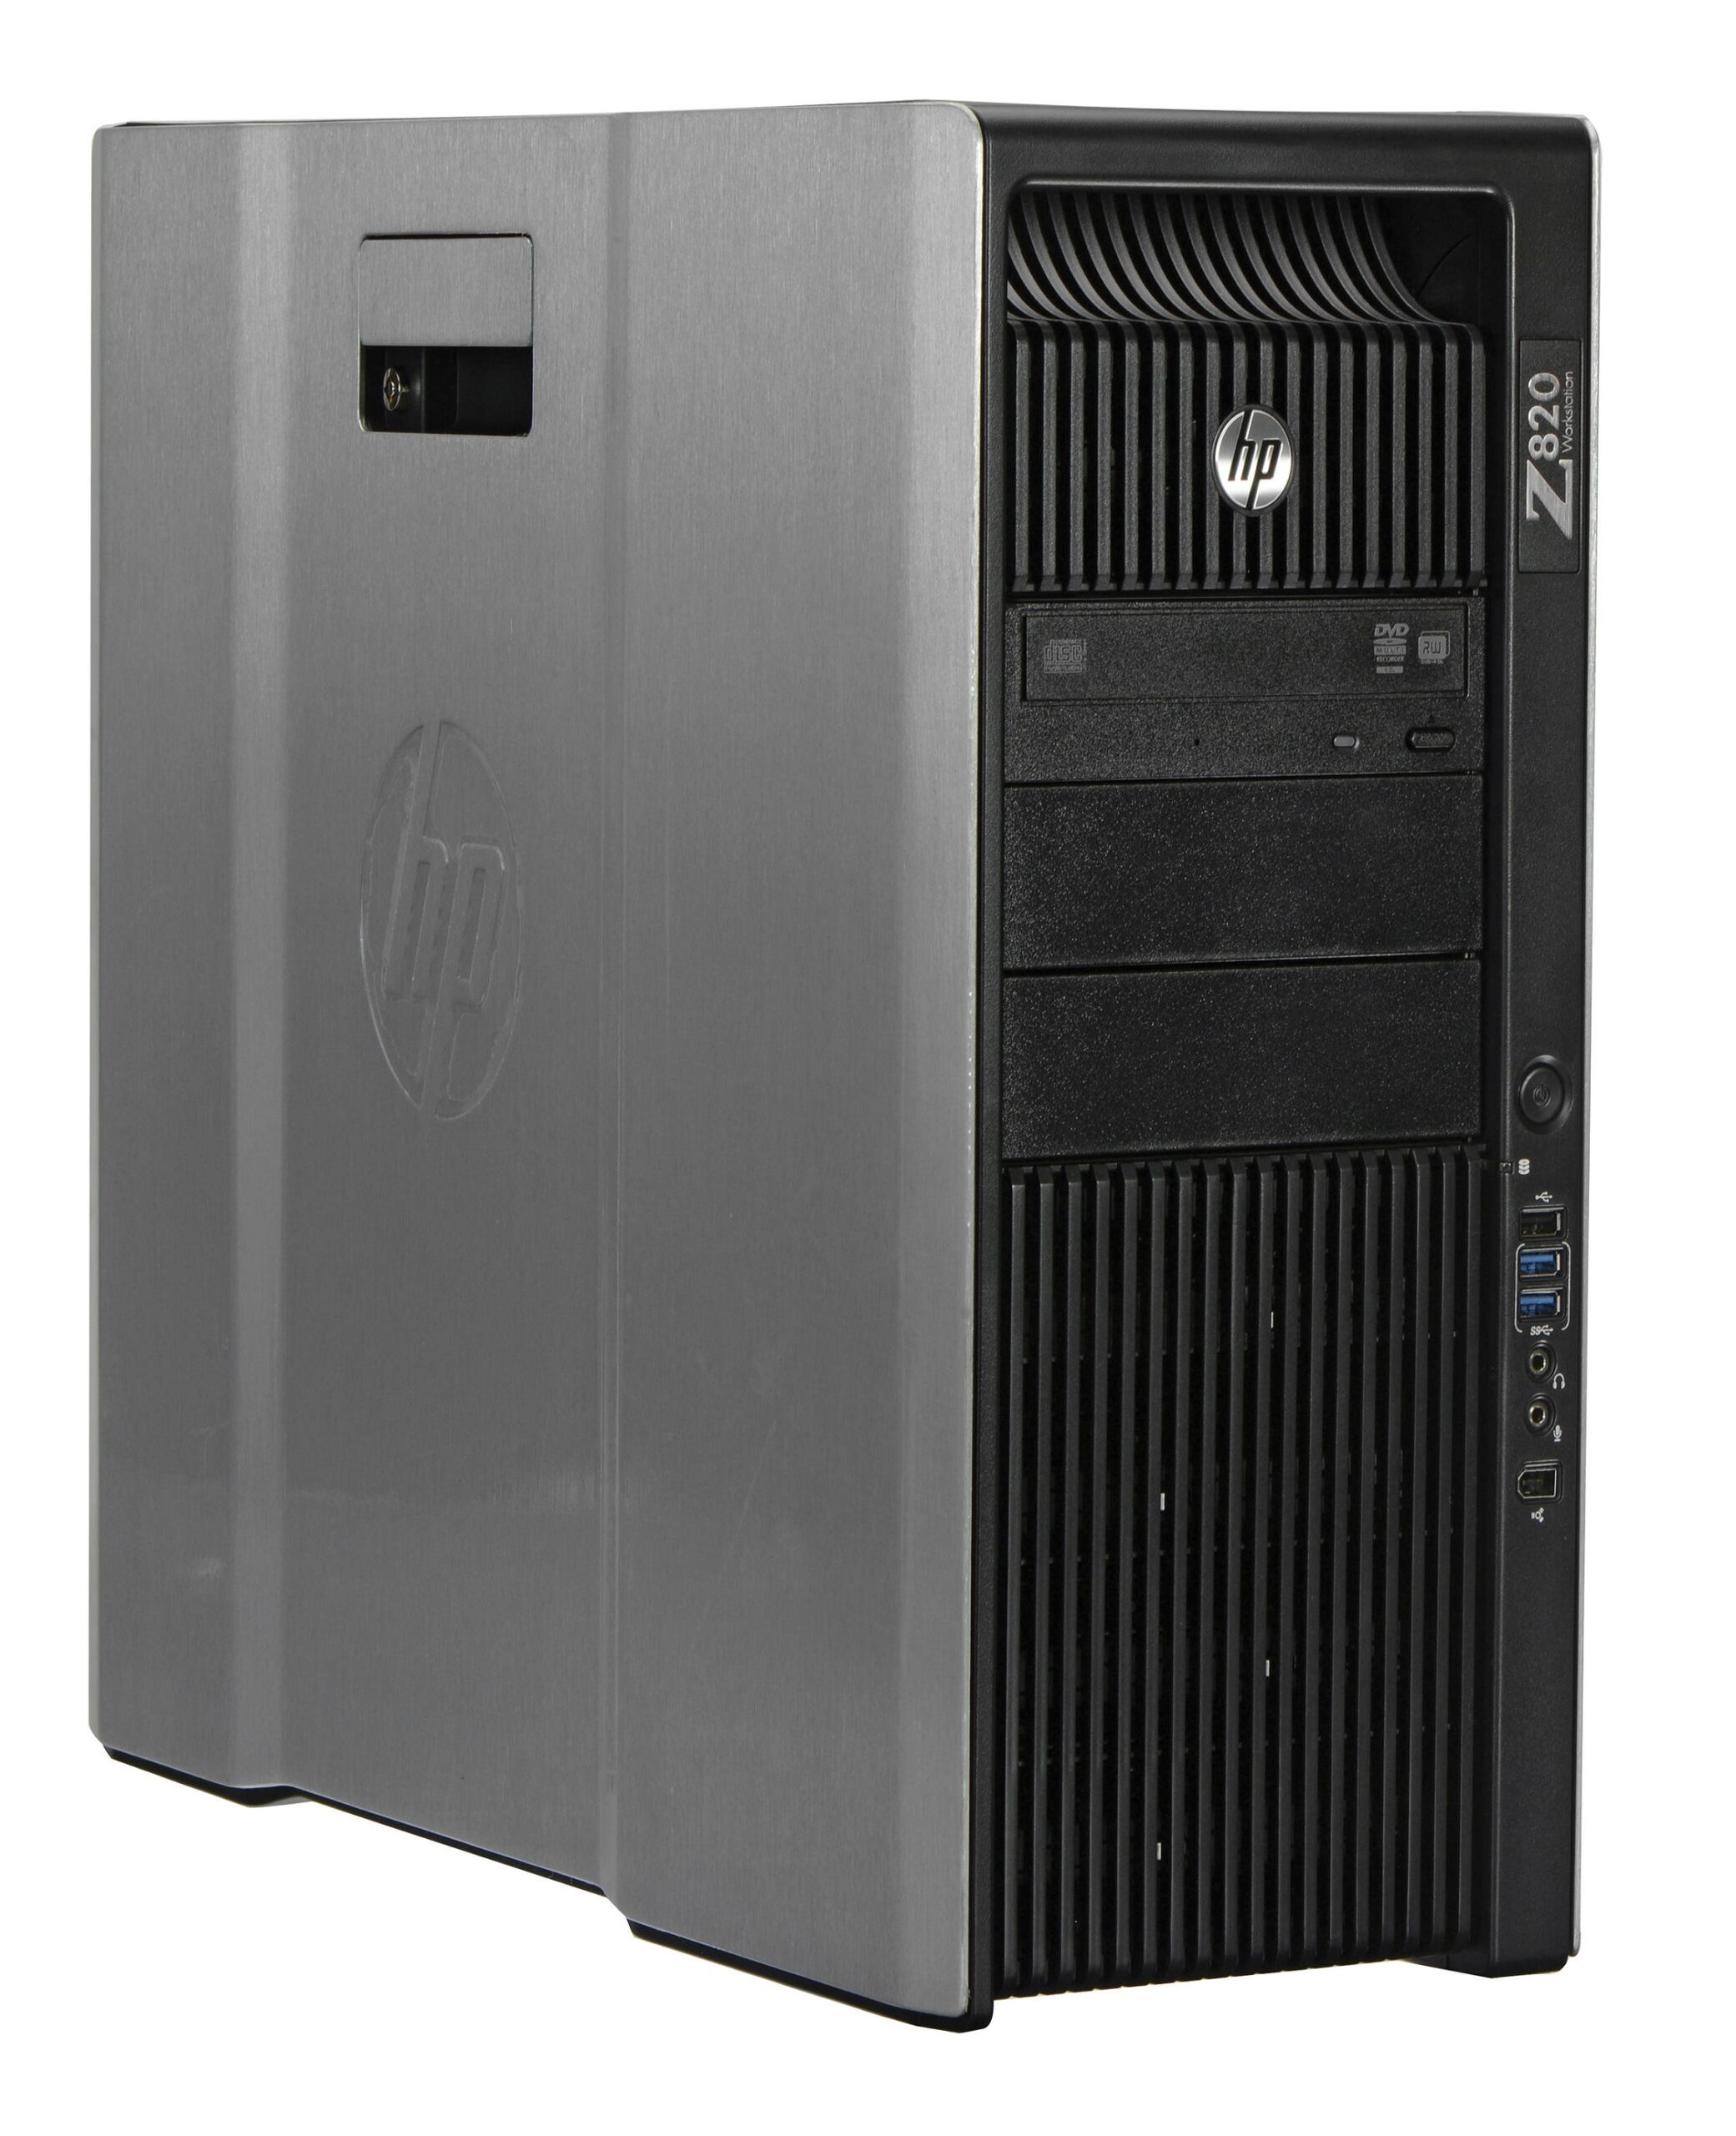 HP Z820 WorkStation